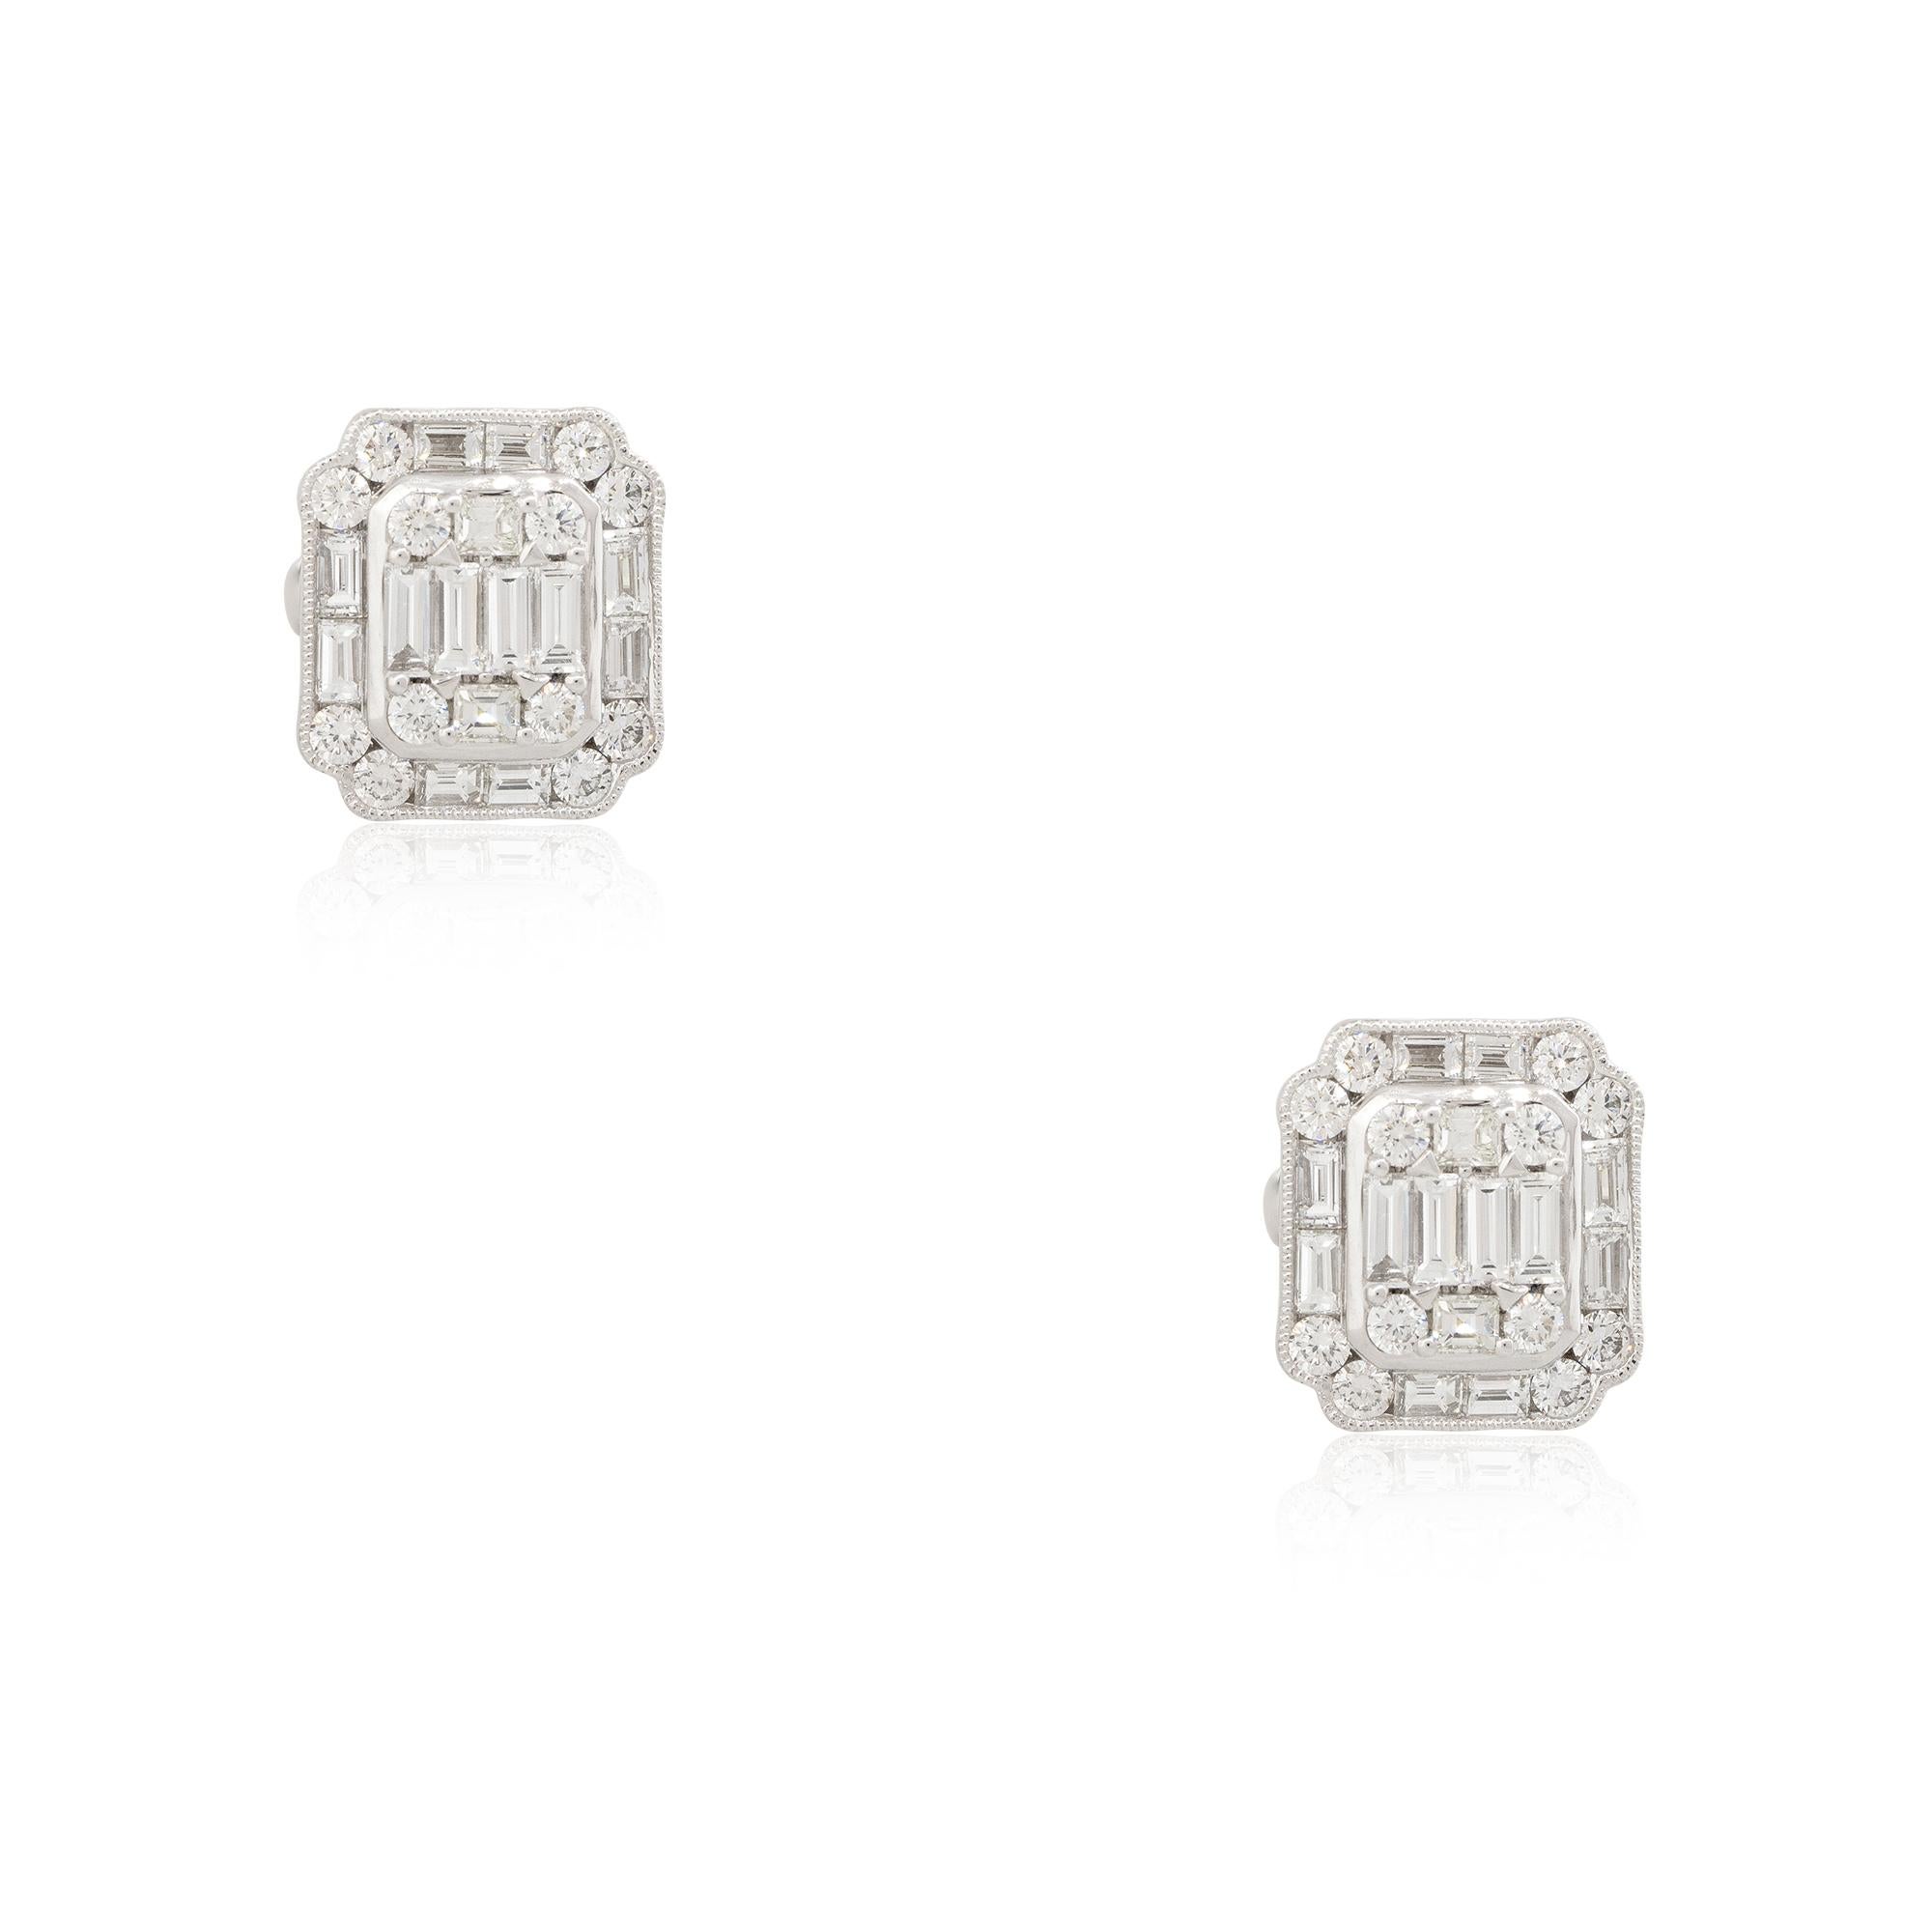 18k White Gold 2.98ctw Mosaic Diamond Square Shaped Earrings

Product: Square Diamond Mosaic Earrings
Material: 18k White Gold
Diamond Details: There are approximately 2.02 carats of Baguette cut diamonds (28 stones) and approximately 0.96 carats of